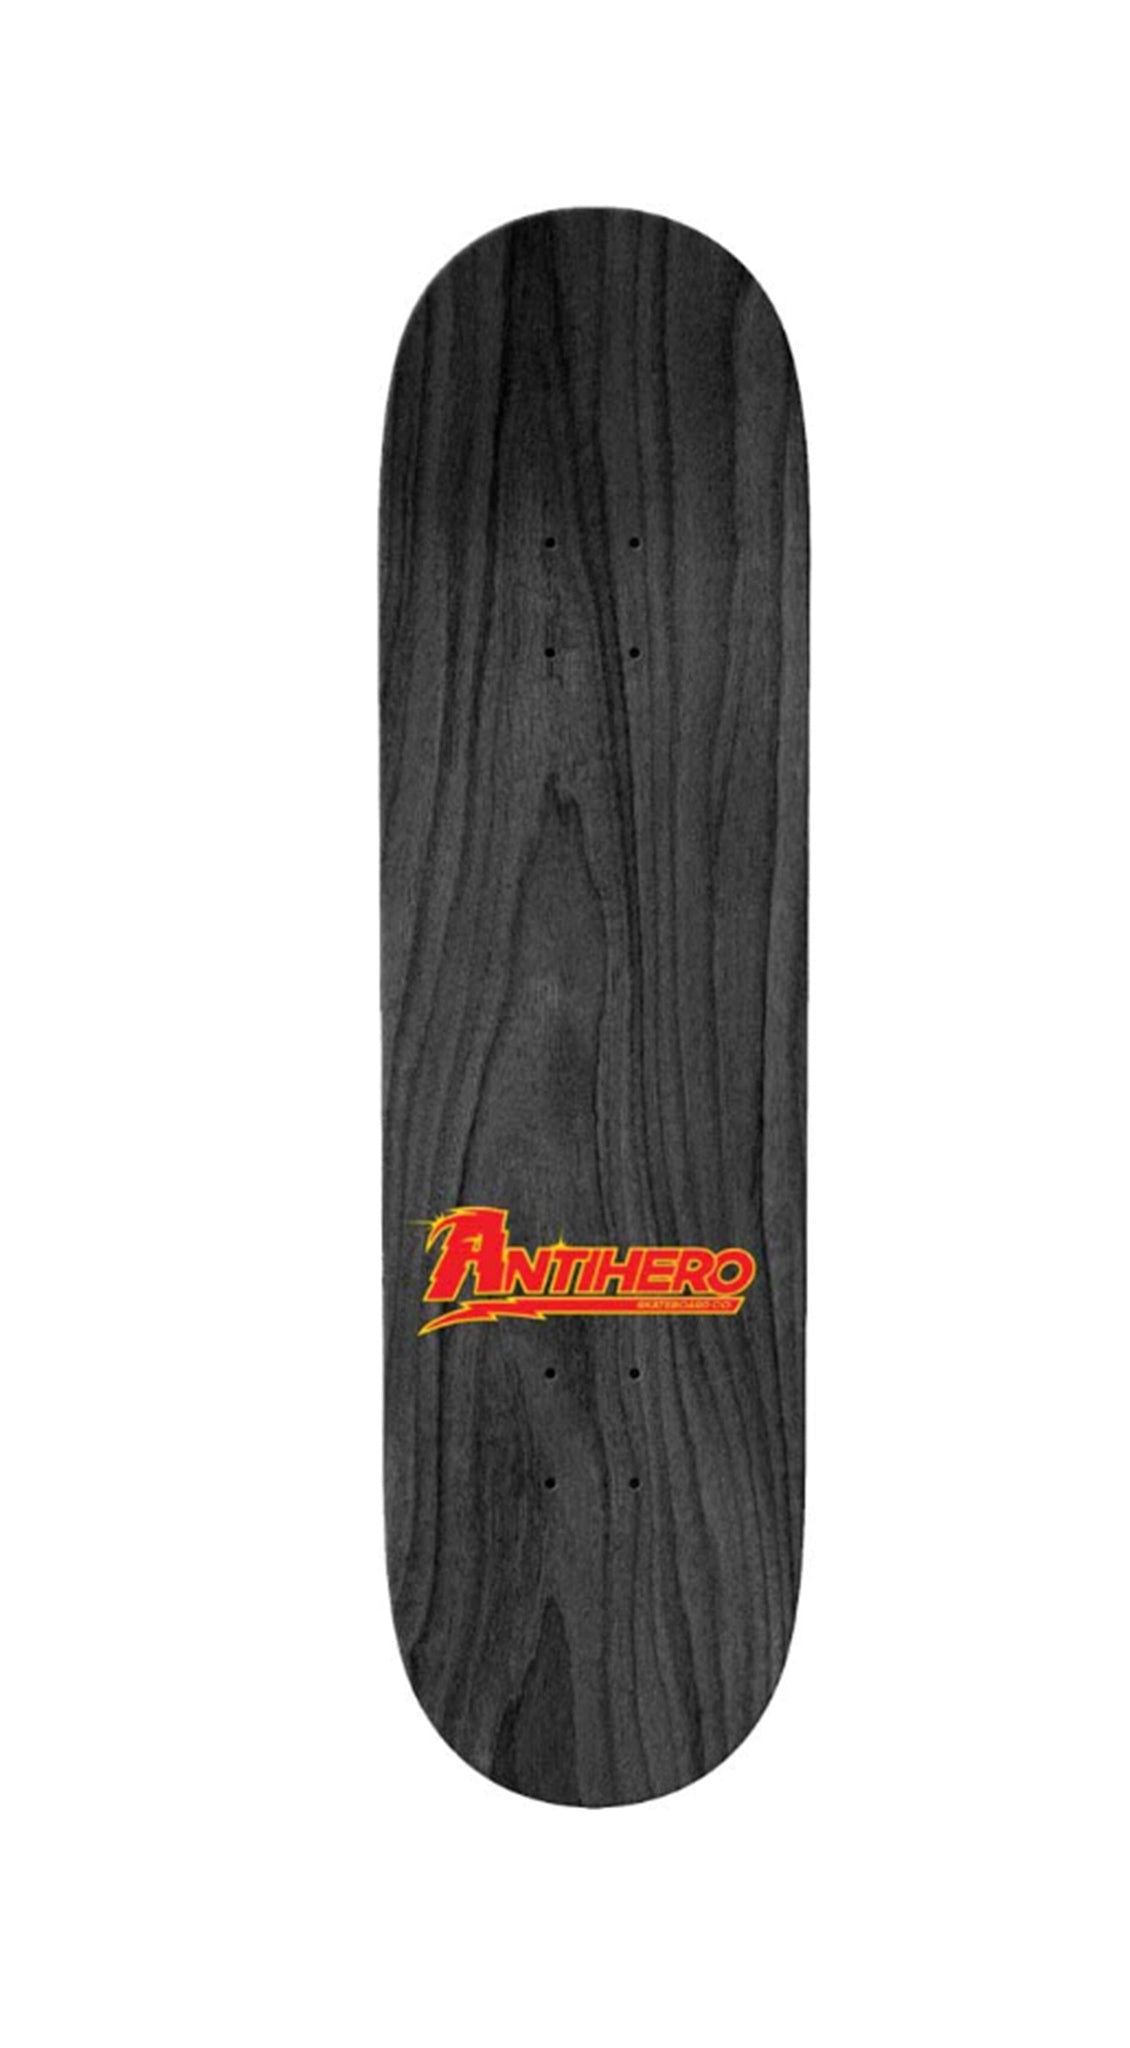 Antihero BA Space Odyssey 8.5 Skateboard Deck -Tabla Tabla/Deck Antihero 